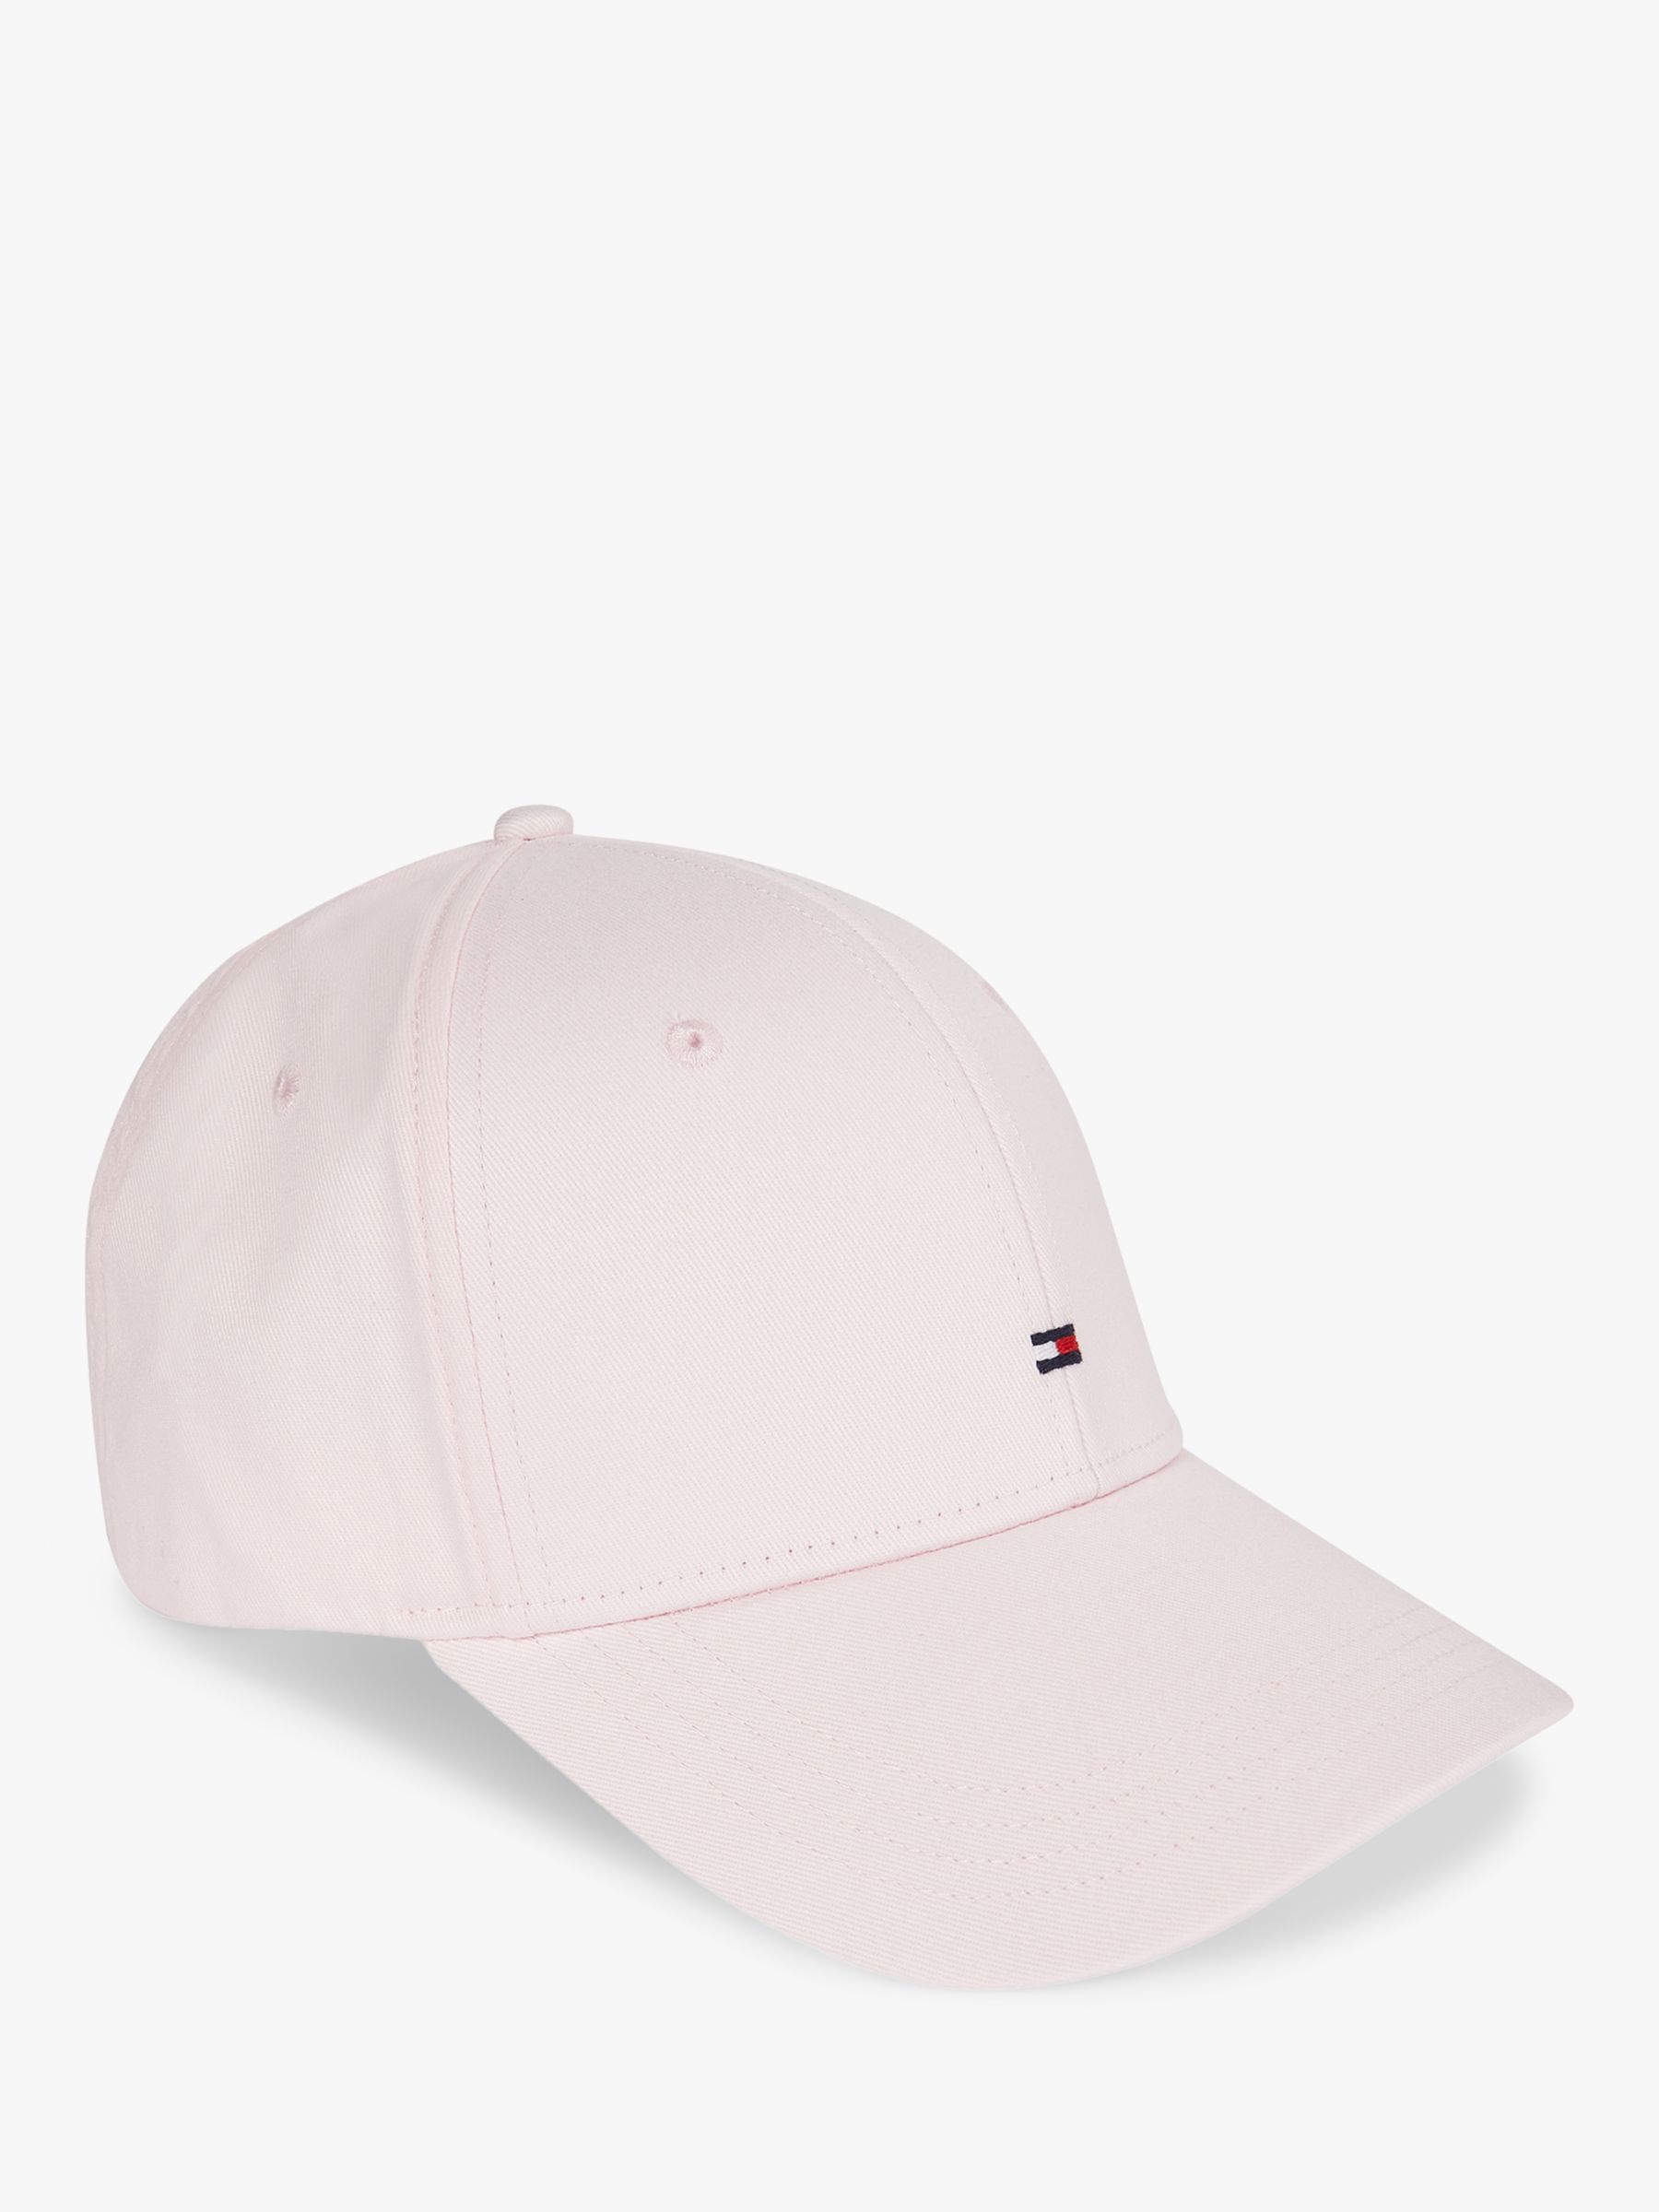 Tommy Hilfiger Logo Cotton Cap, Light Pink at John Lewis & Partners